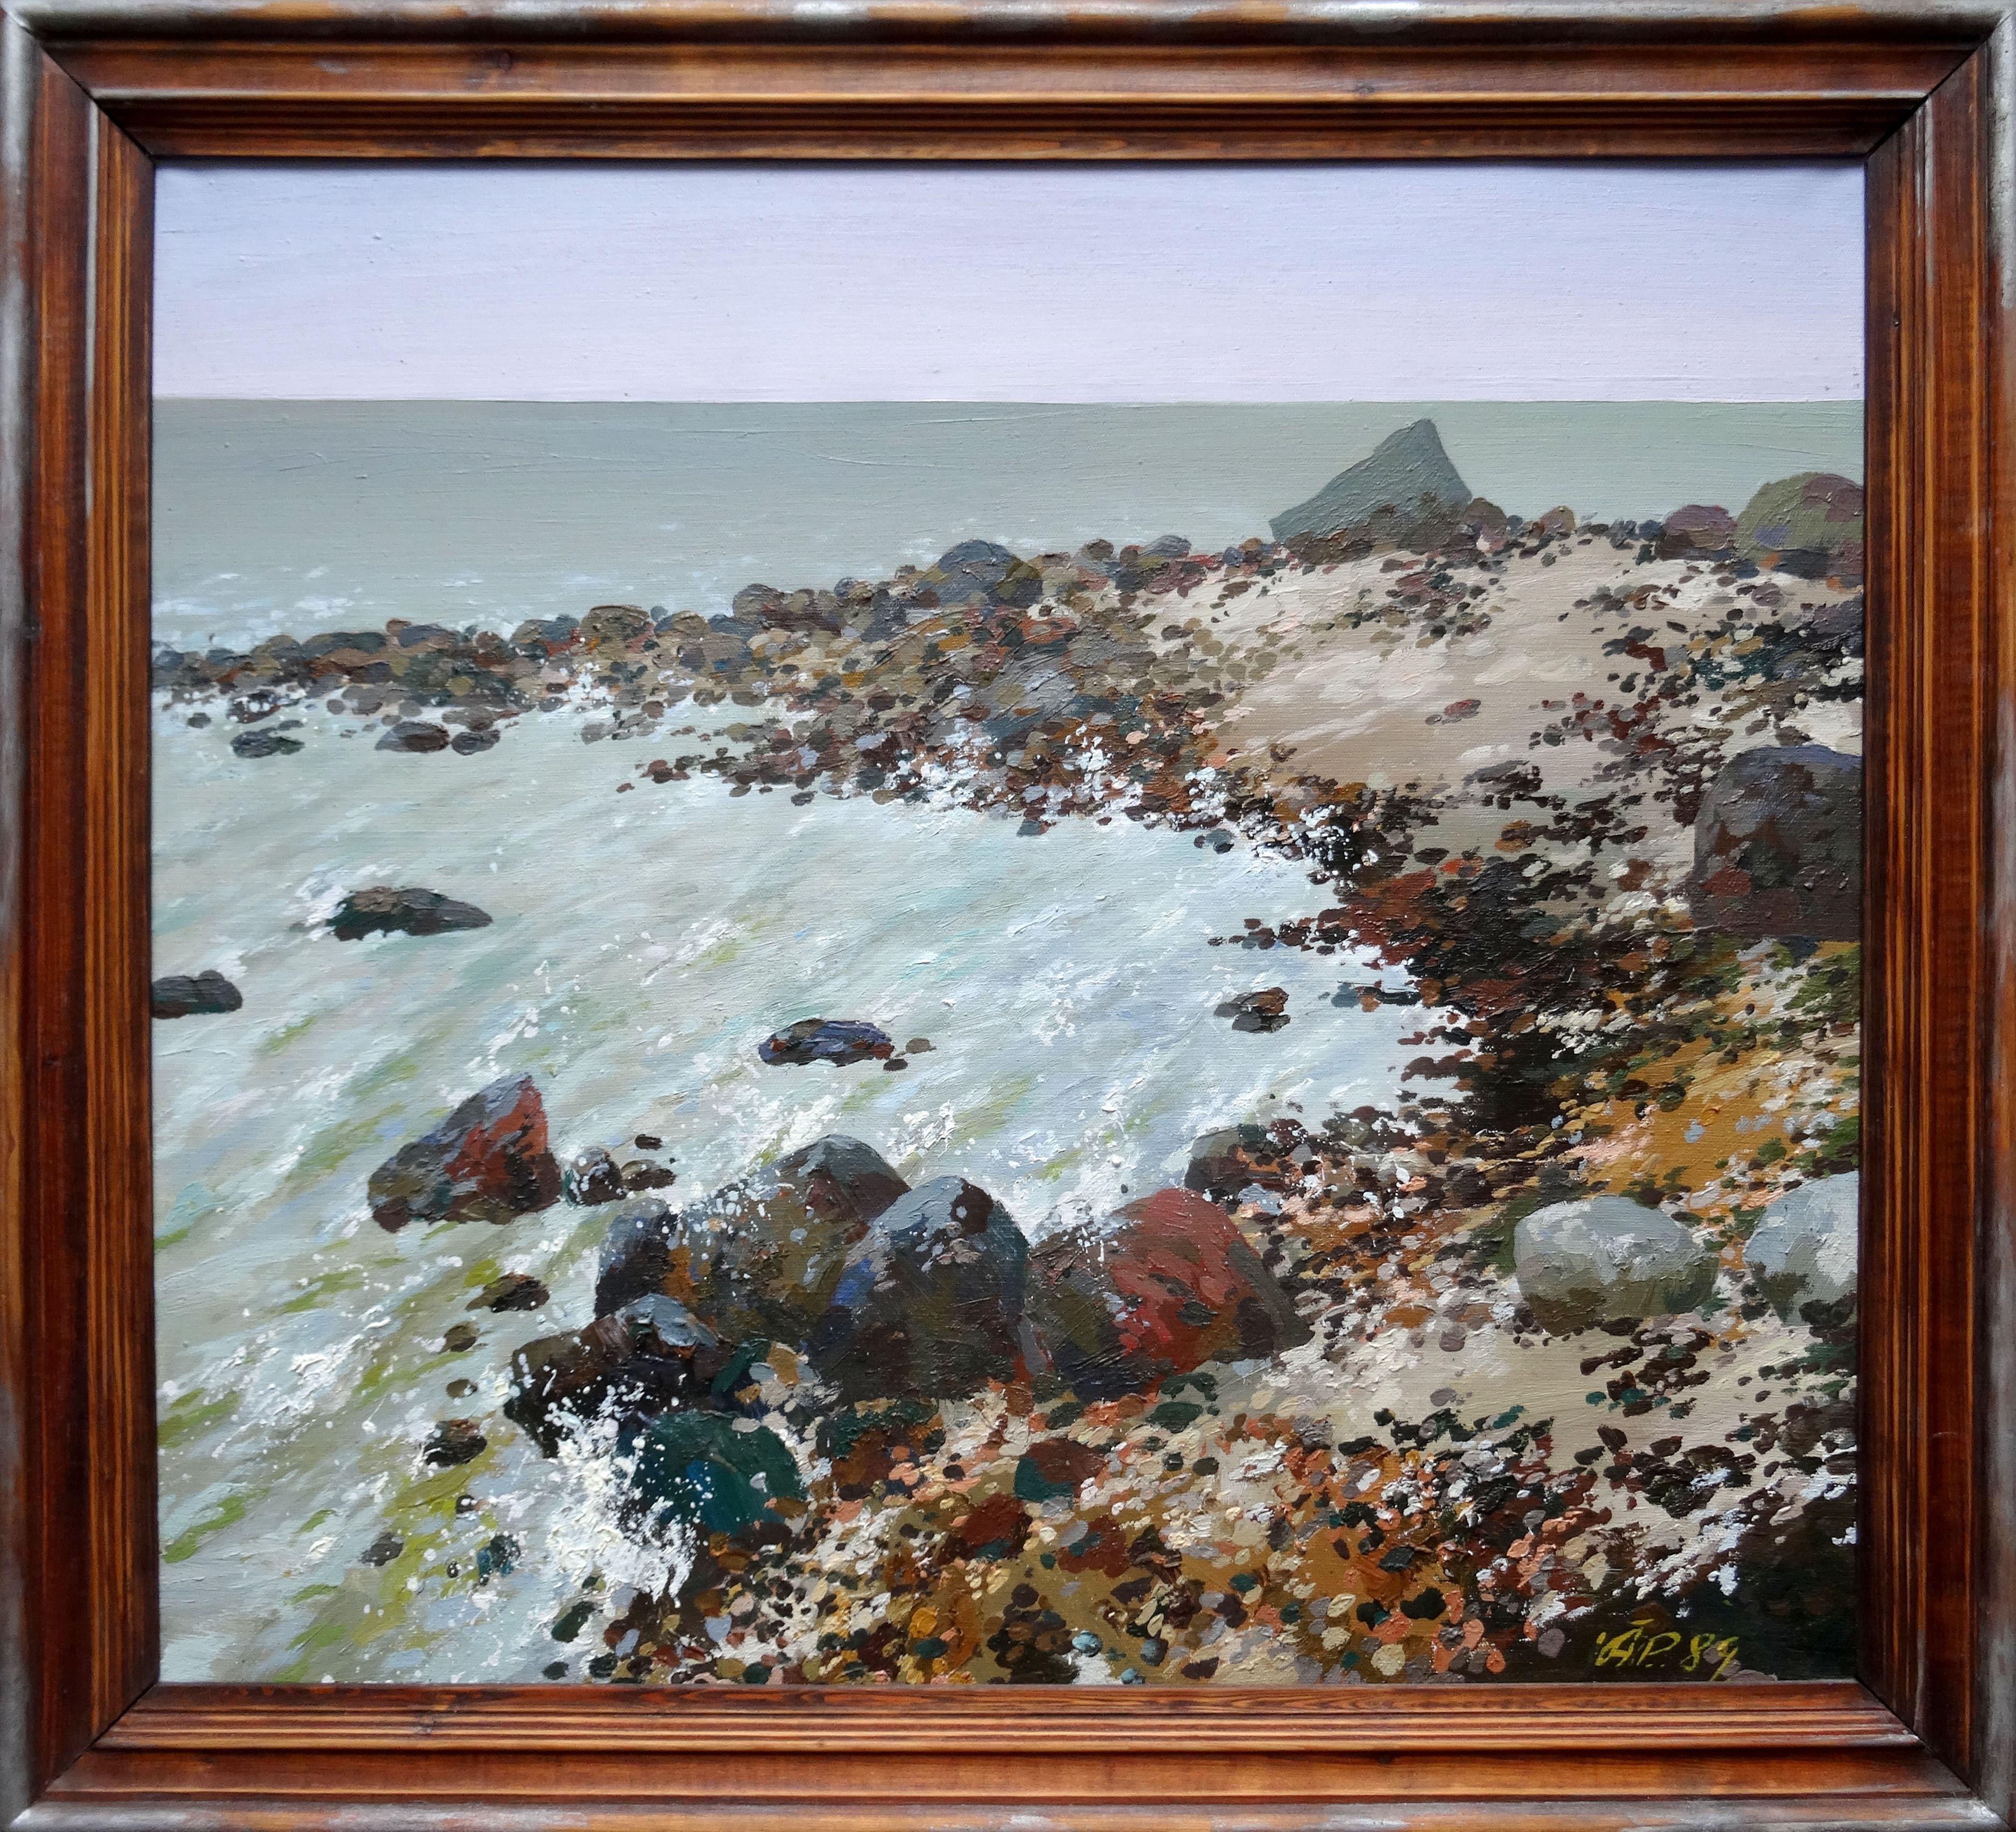 Sea. 1989 Oil on canvas, 81x75 cm - Painting by Arija Paikule